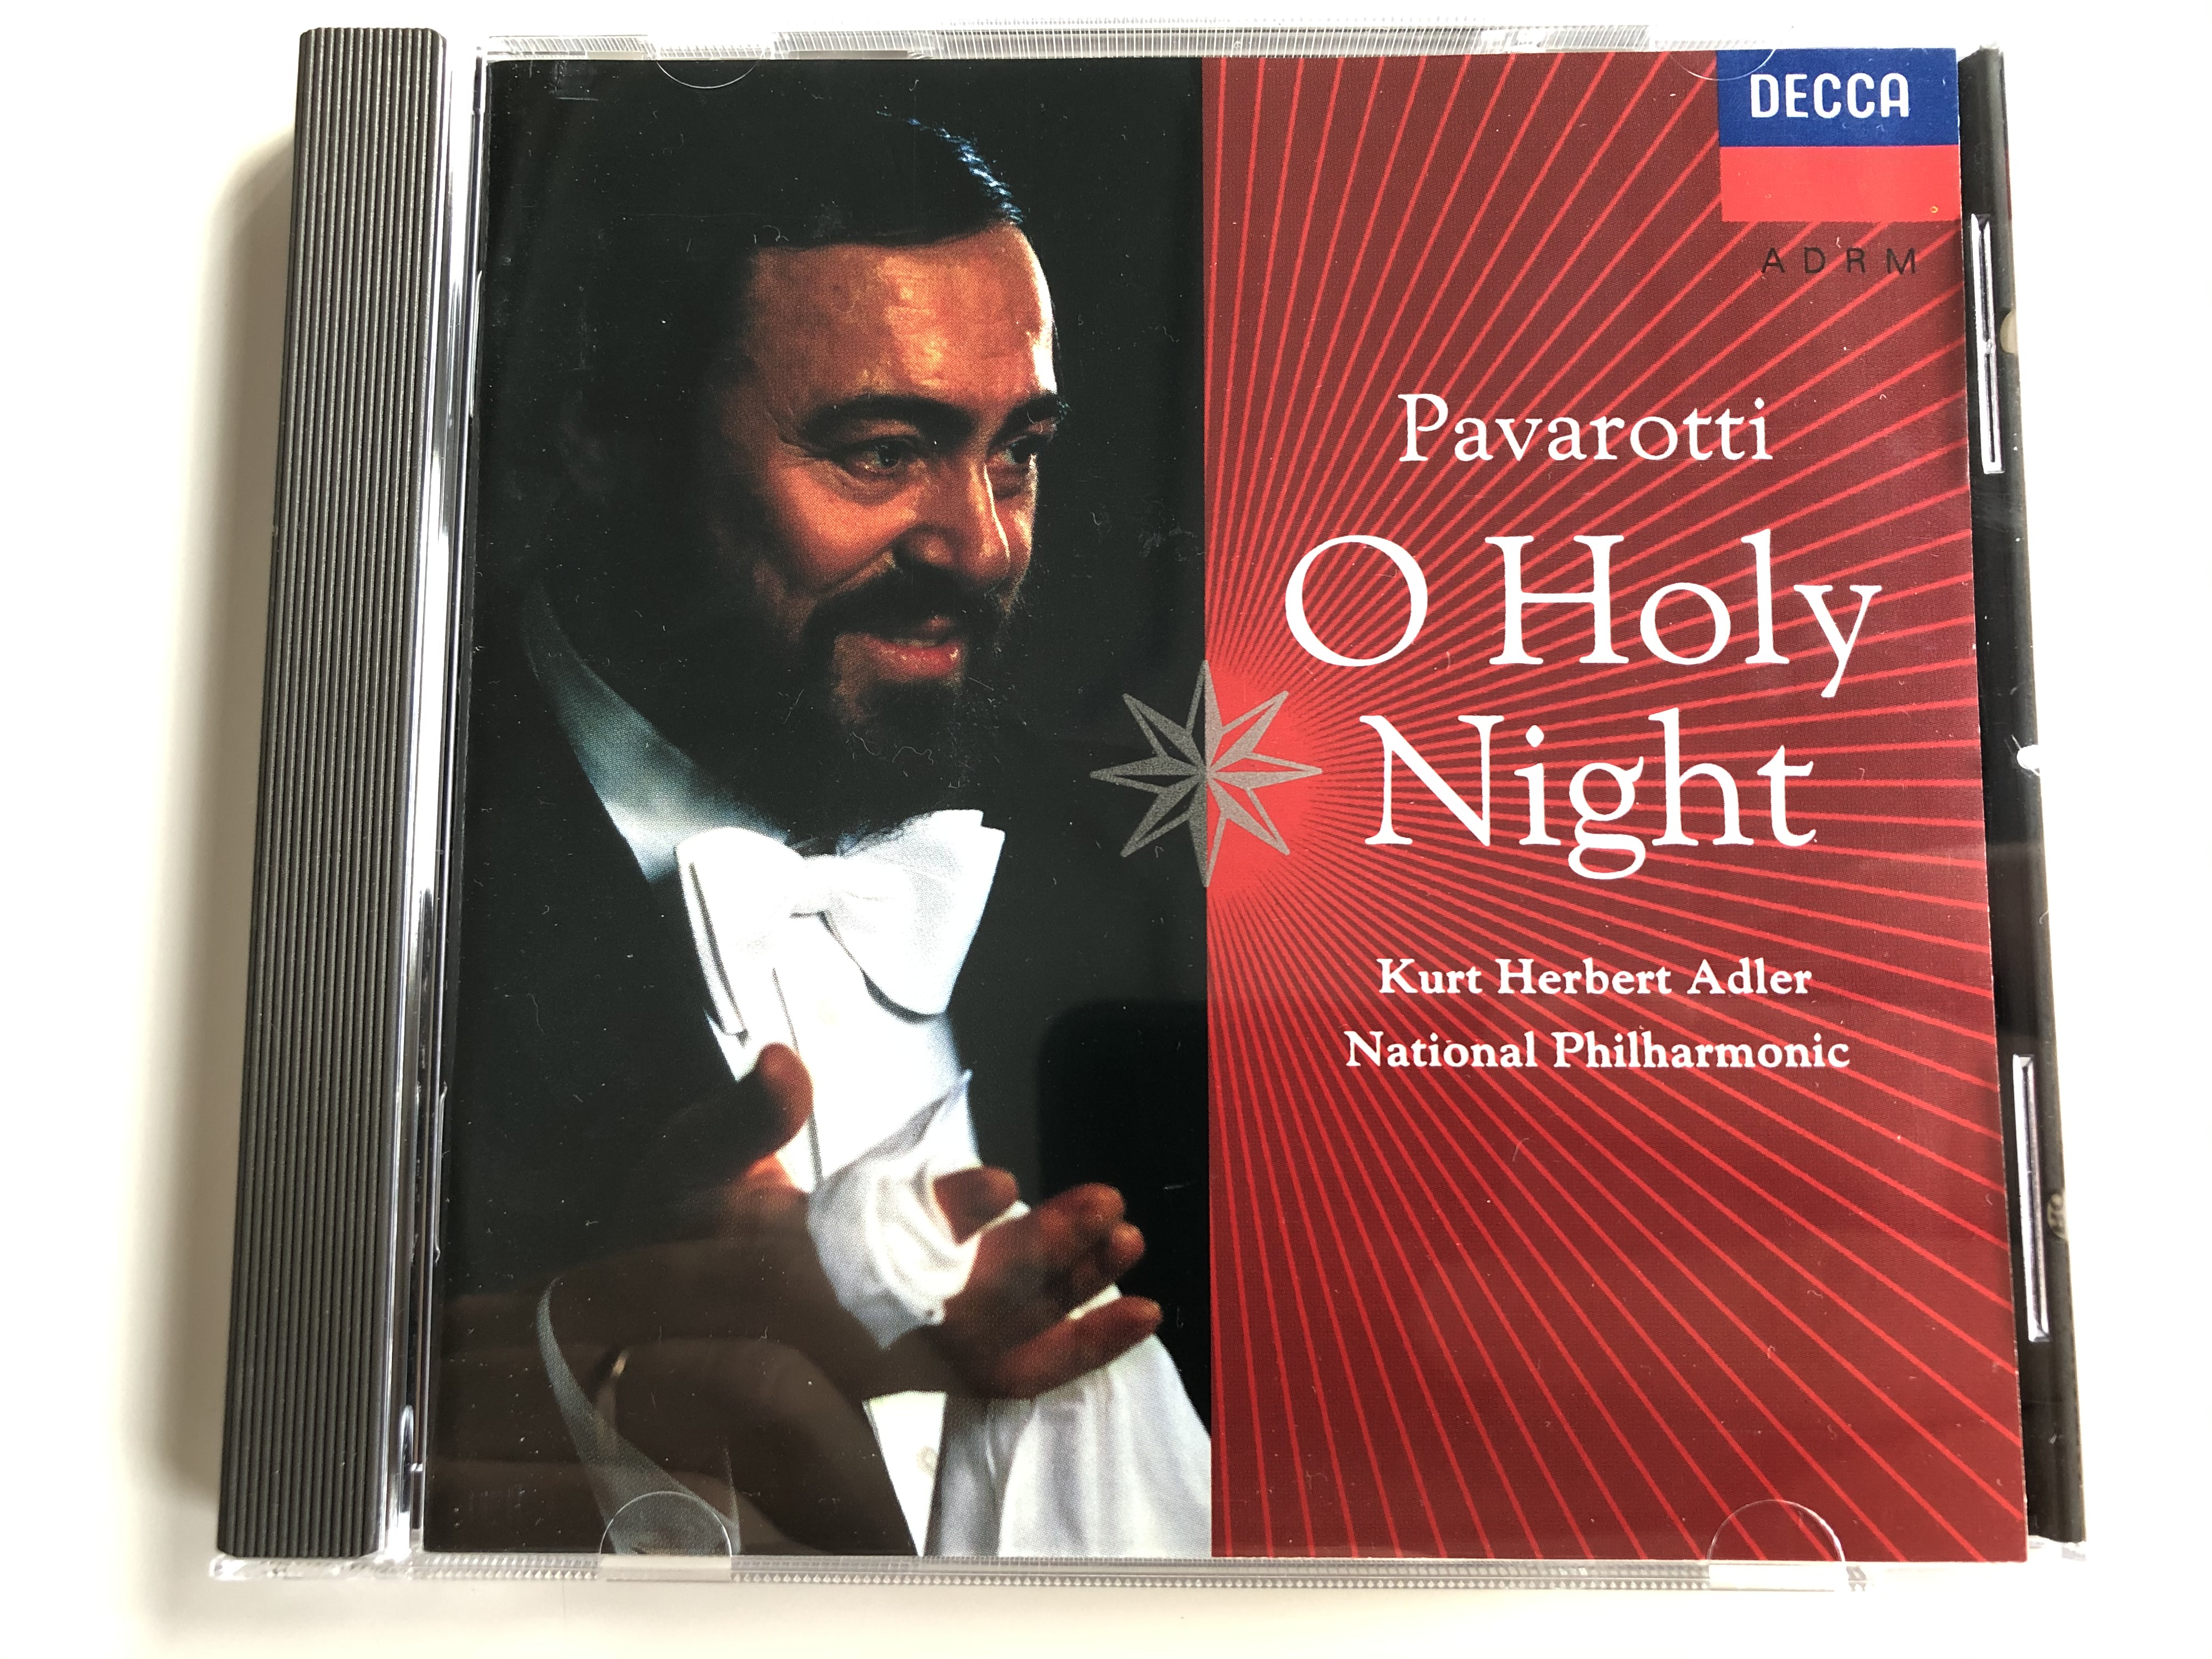 pavarotti-o-holy-night-kurt-herbert-adler-national-philharmonic-decca-audio-cd-1991-433-710-2-1-.jpg